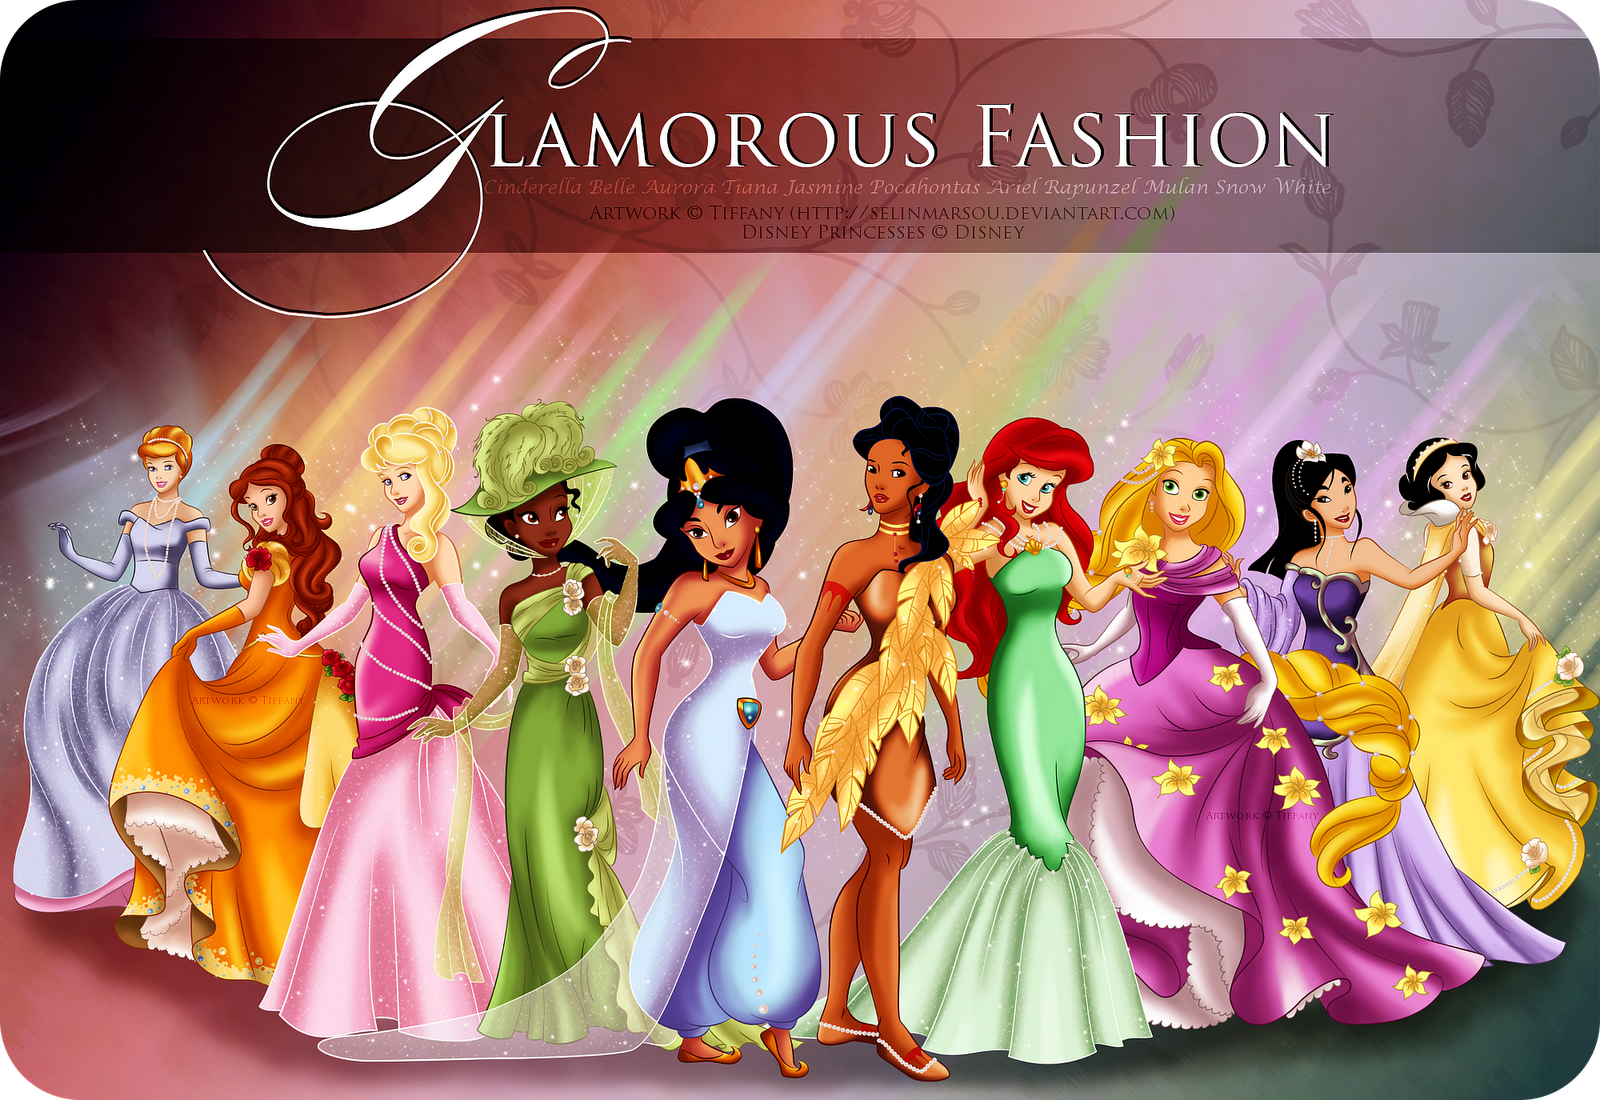 http://1.bp.blogspot.com/-RW6813FR8oA/UCRp90ZFRqI/AAAAAAAAGUM/94bs_ftj6OU/s1600/Princesas_Disney__glamorous_fashion_by_selinmarsou.png